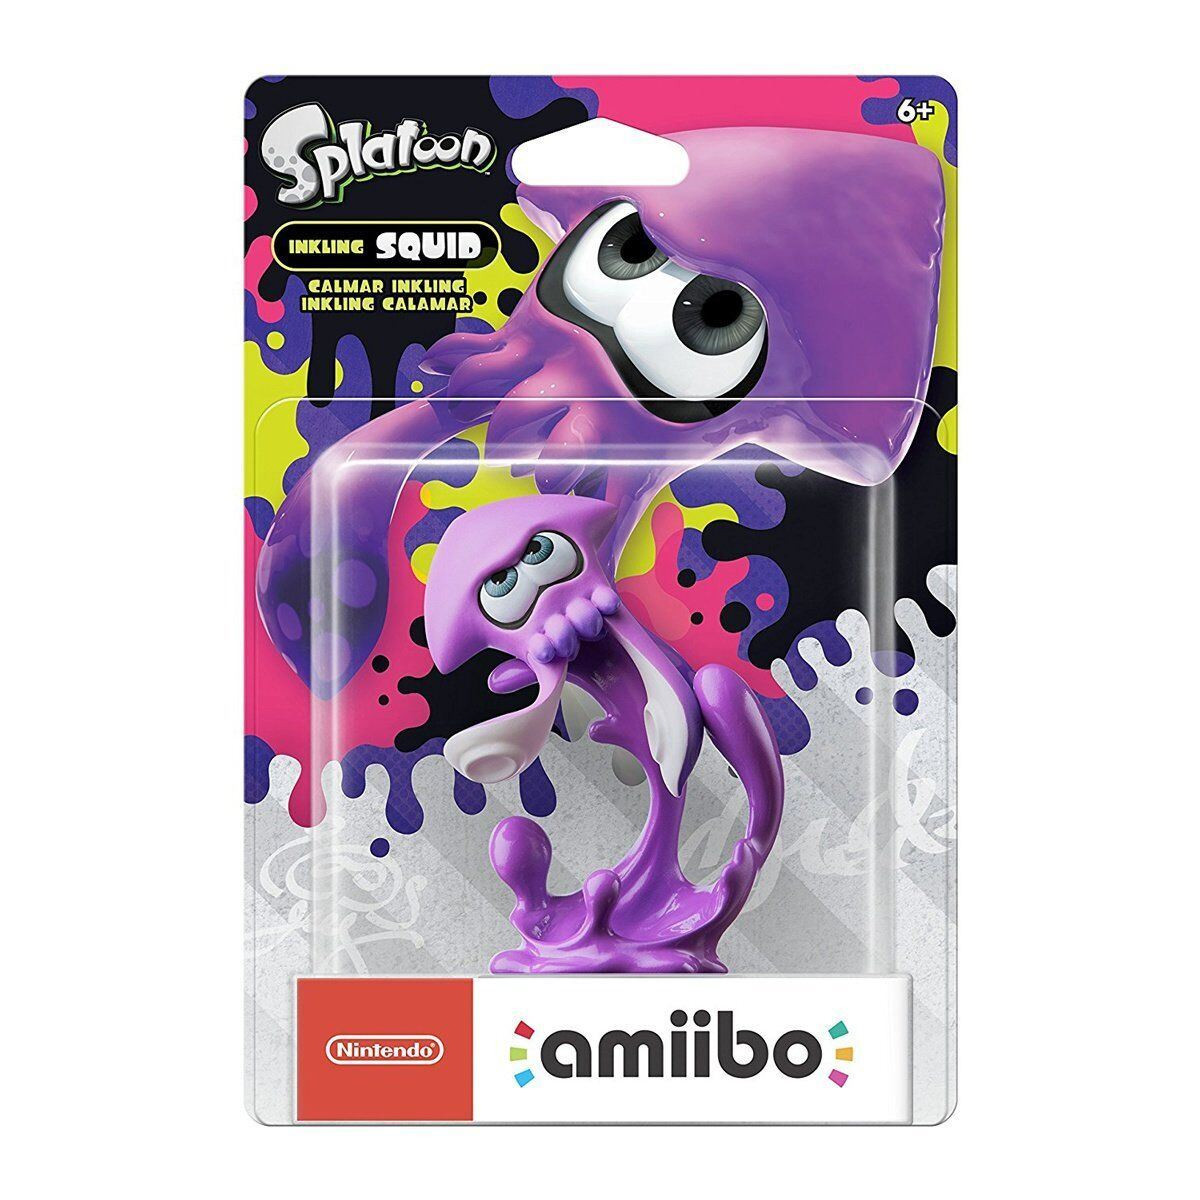 Inkling Squid Amiibo (Splatoon 2) for Nintendo Switch